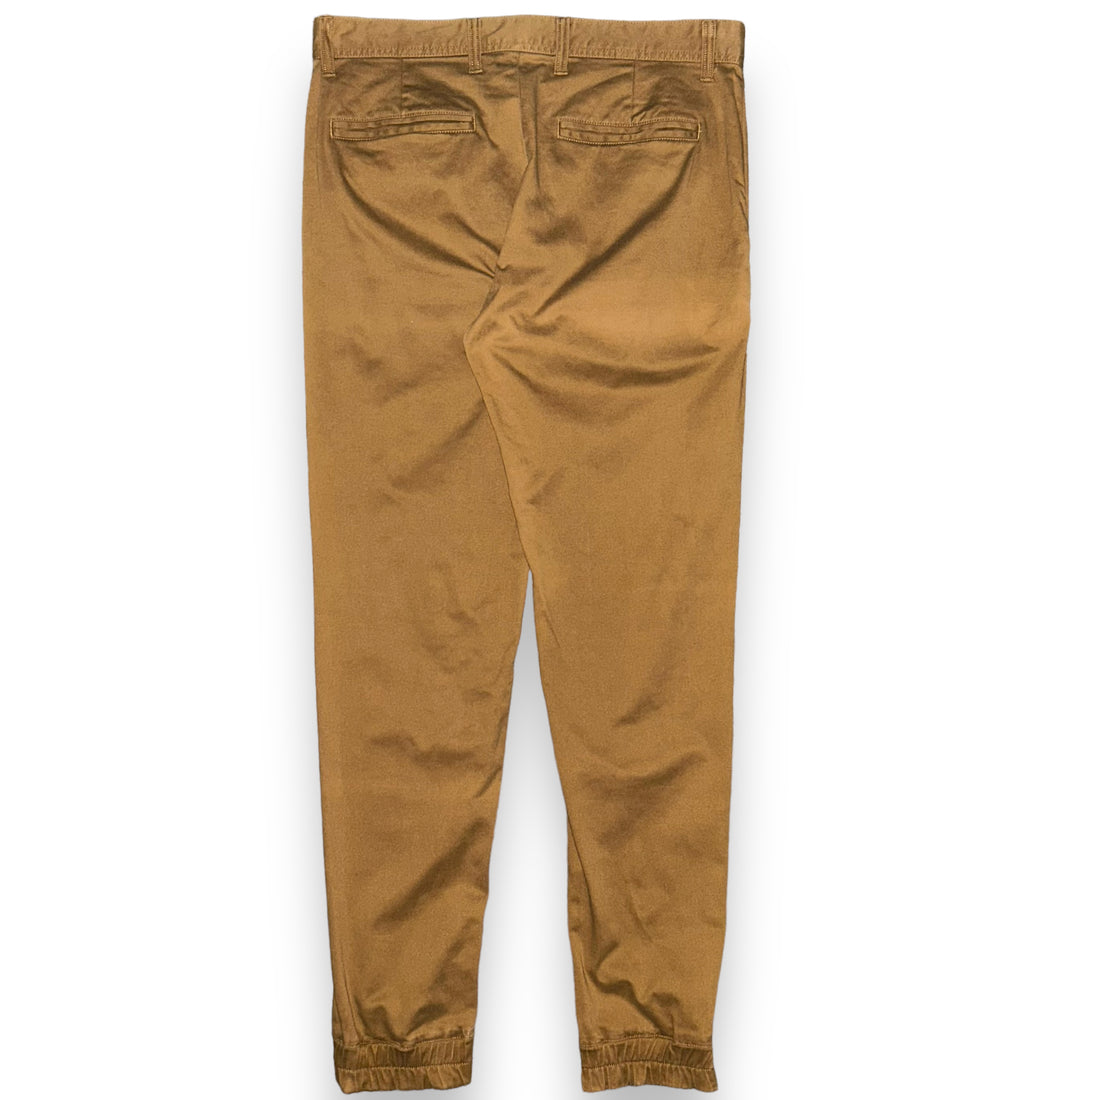 Old Navy Pants (32 US M)